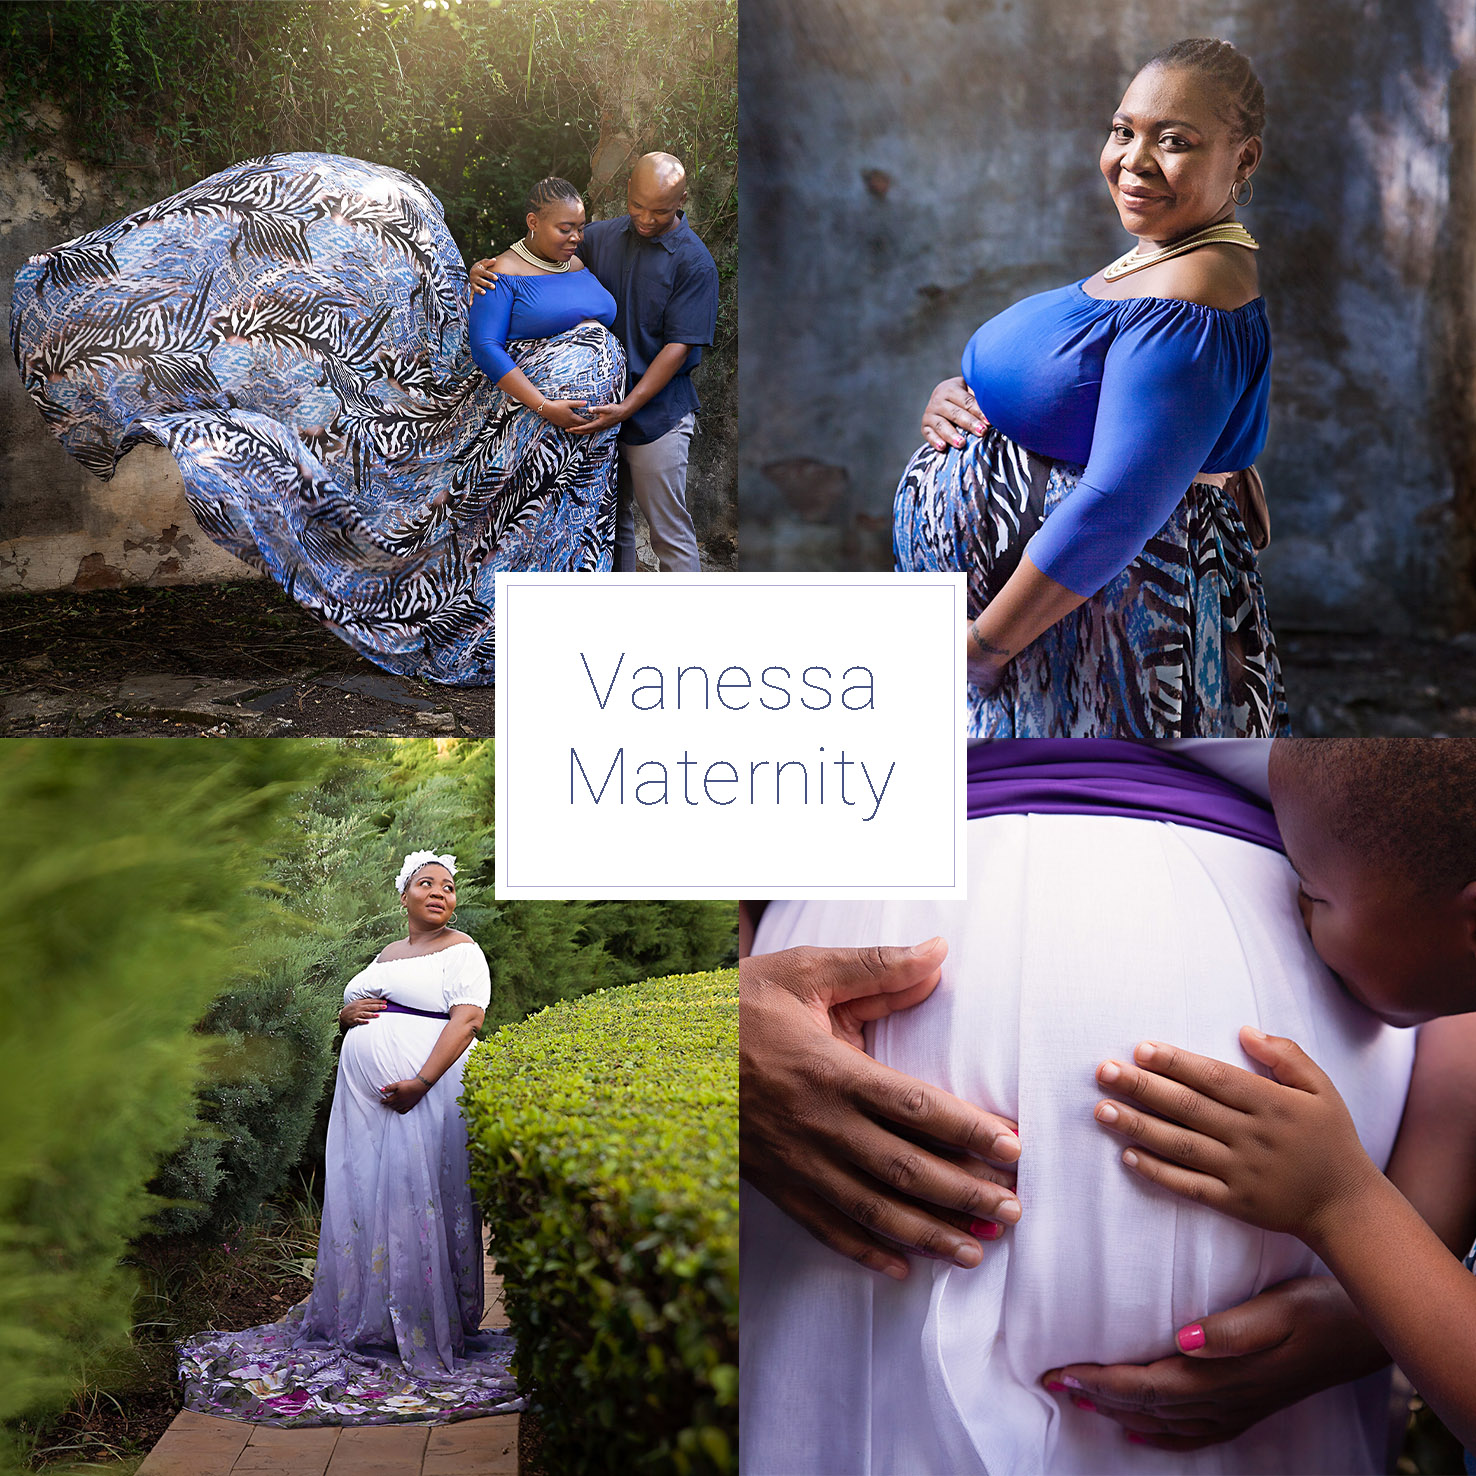 Vanessa Maternity